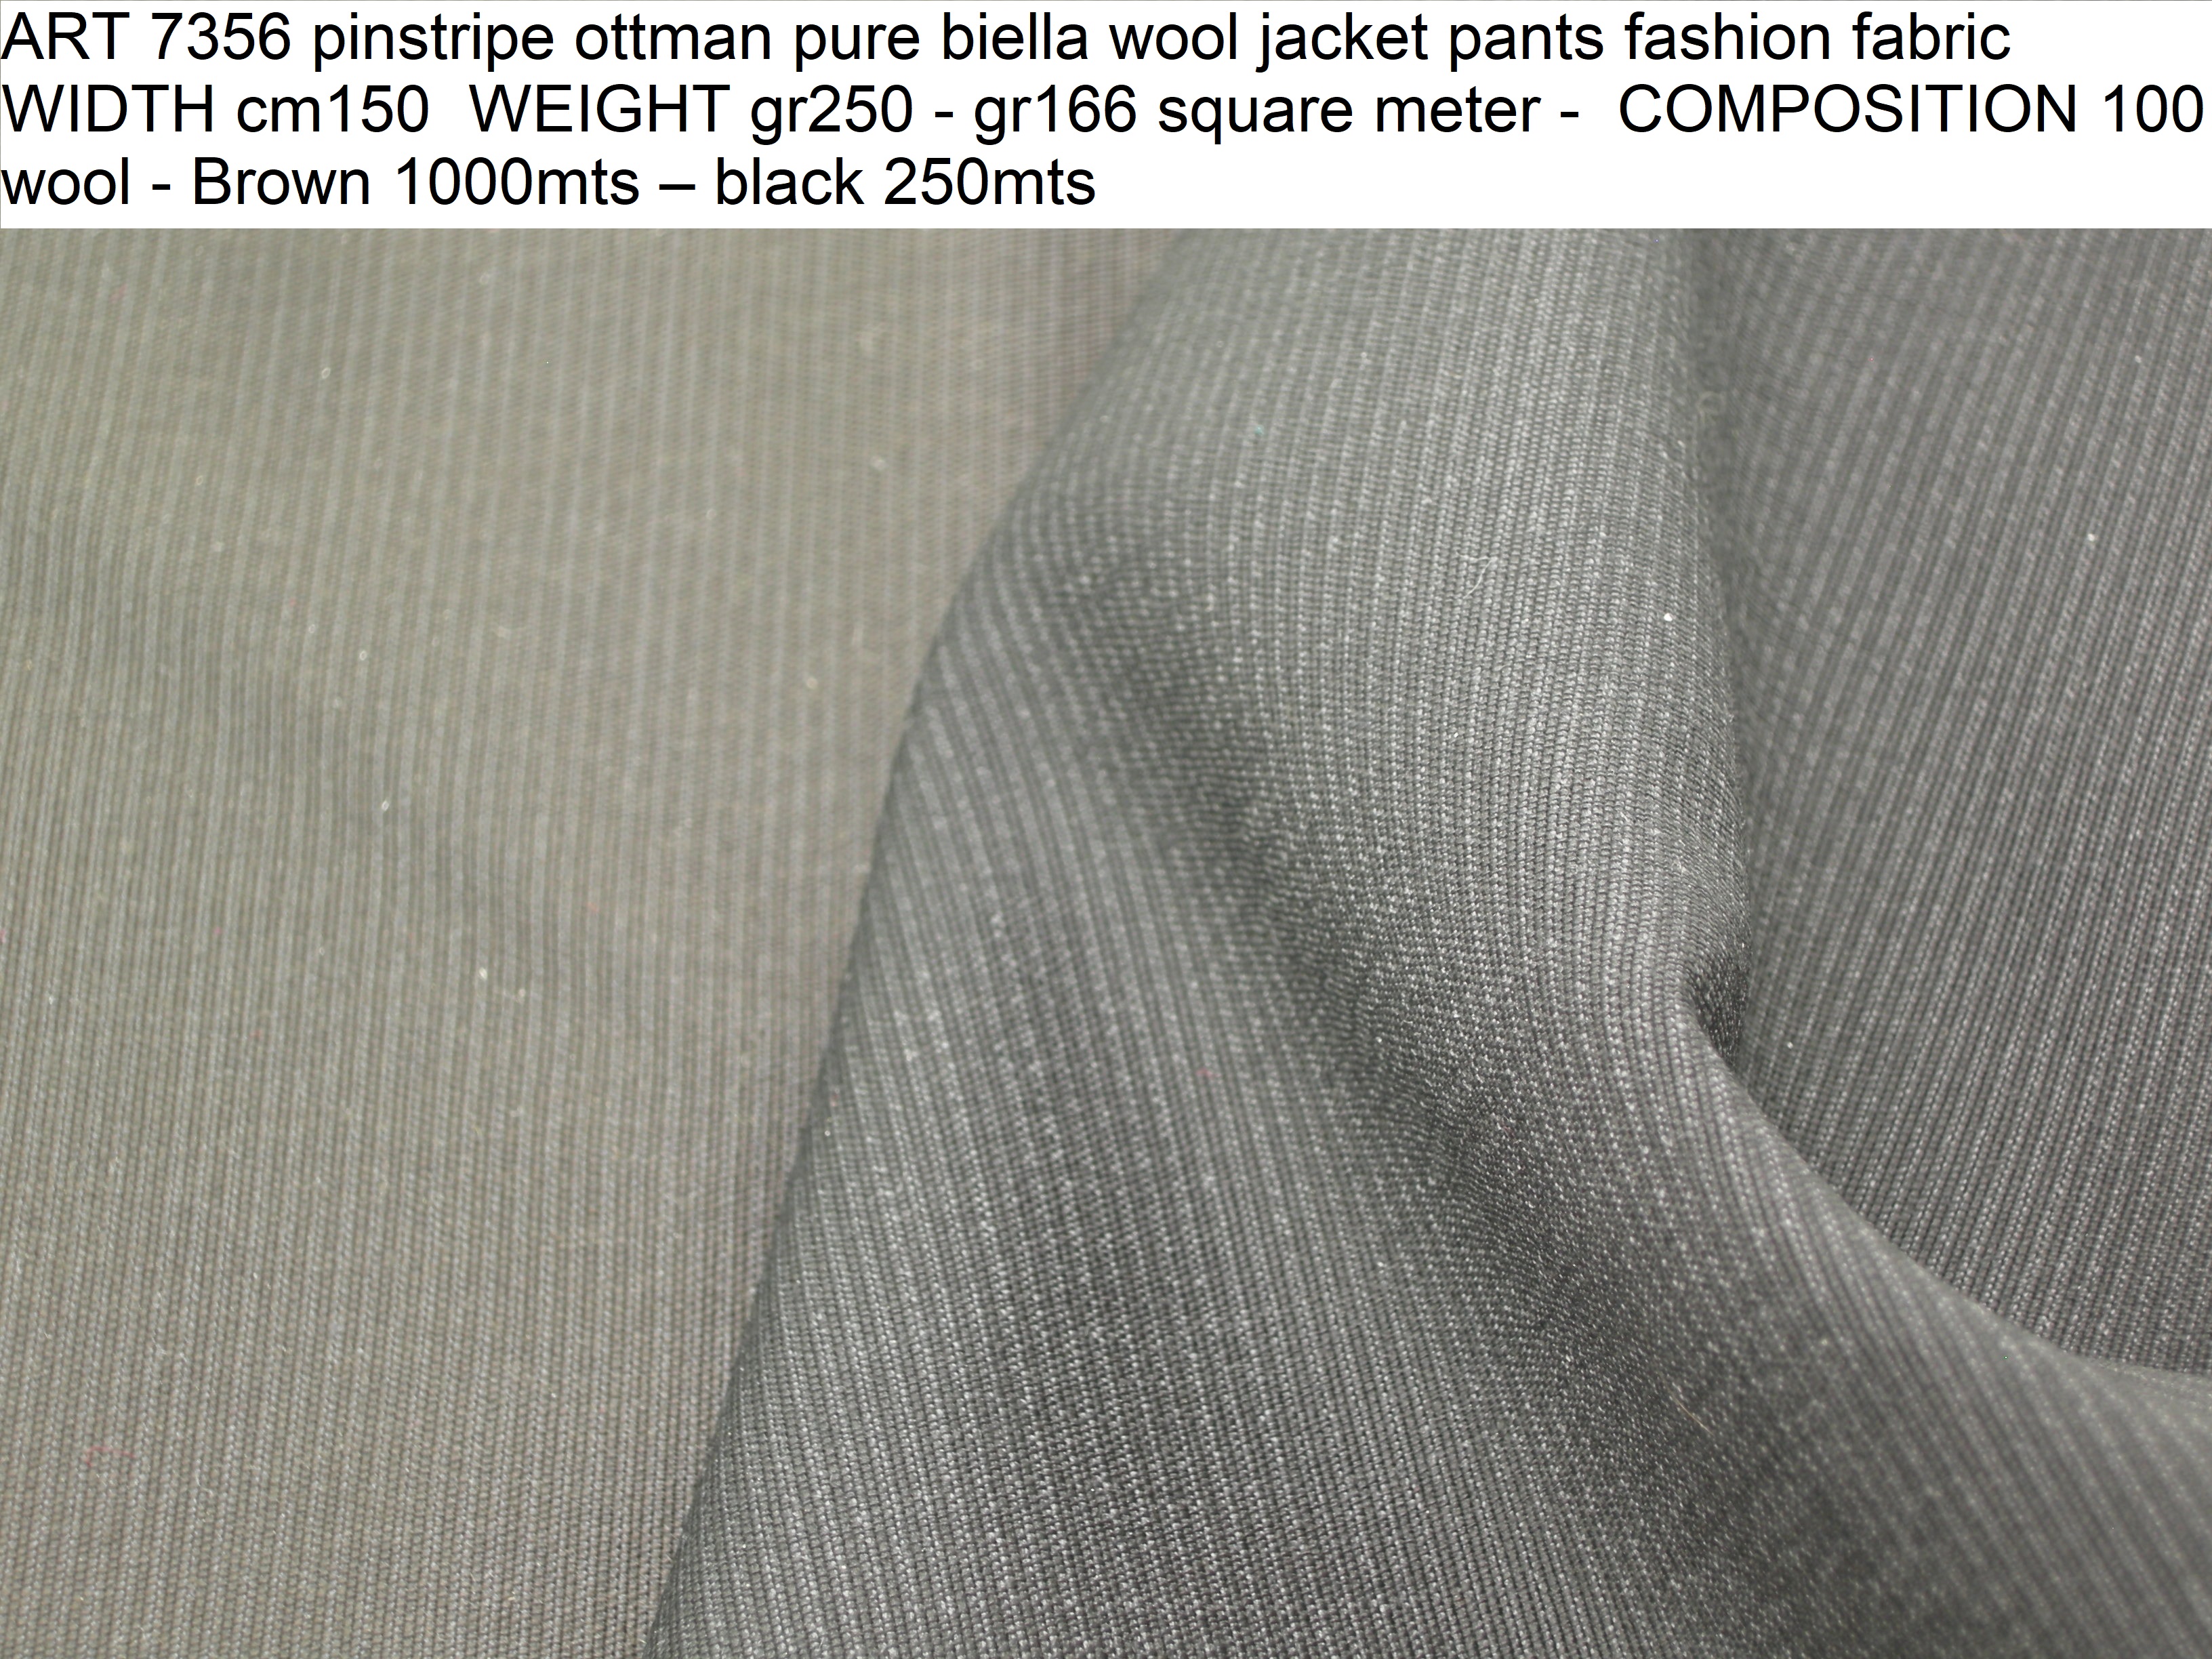 ART 7356 pinstripe ottman pure biella wool jacket pants fashion fabric WIDTH cm150 WEIGHT gr250 - gr166 square meter - COMPOSITION 100 wool - Brown 1000mts – black 250mts